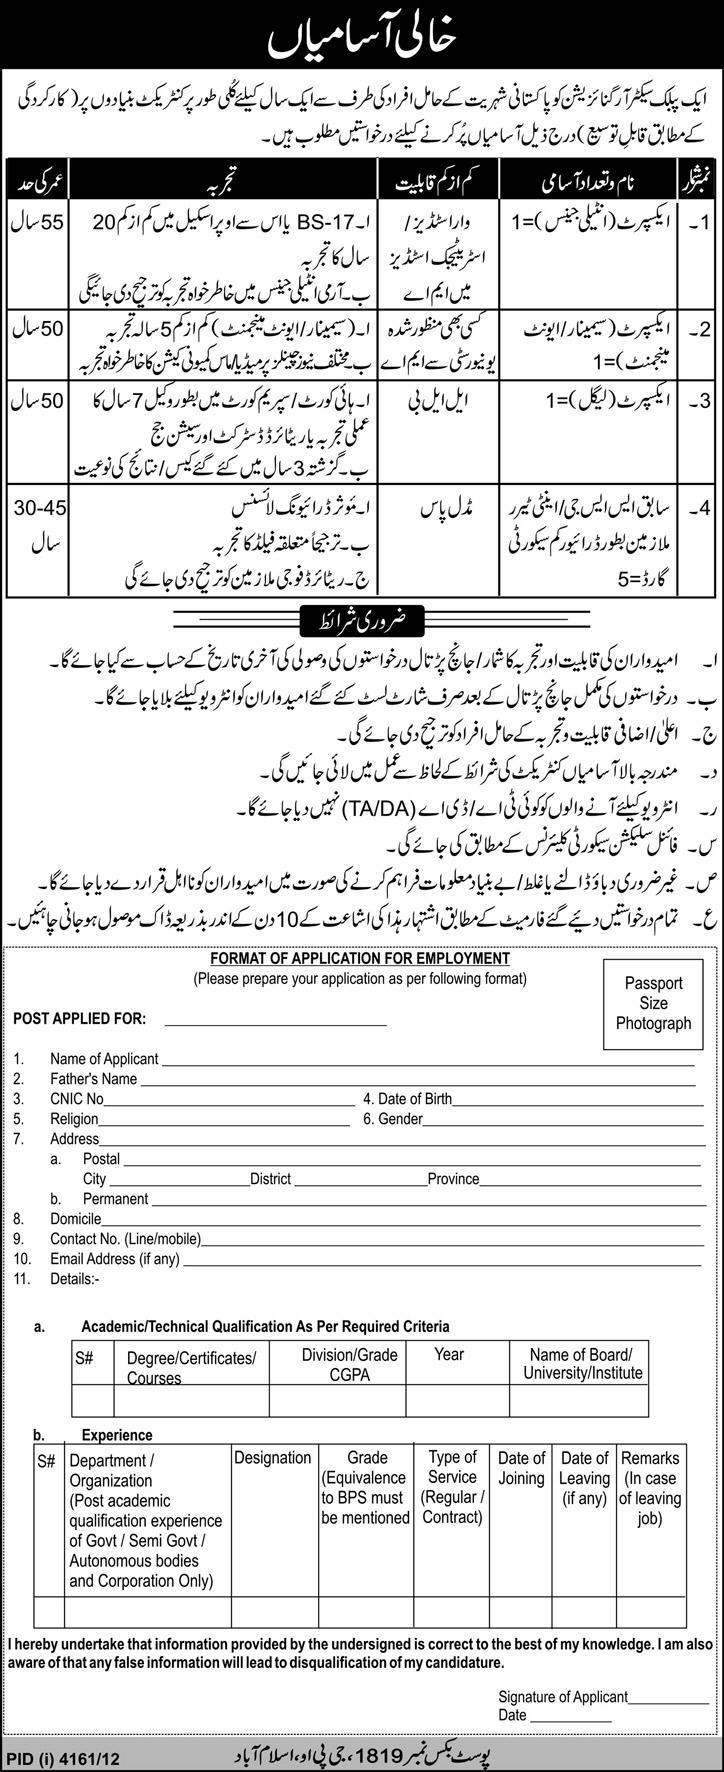 PO Box 1819 GPO Islamabad Jobs 2013 Application Form Download